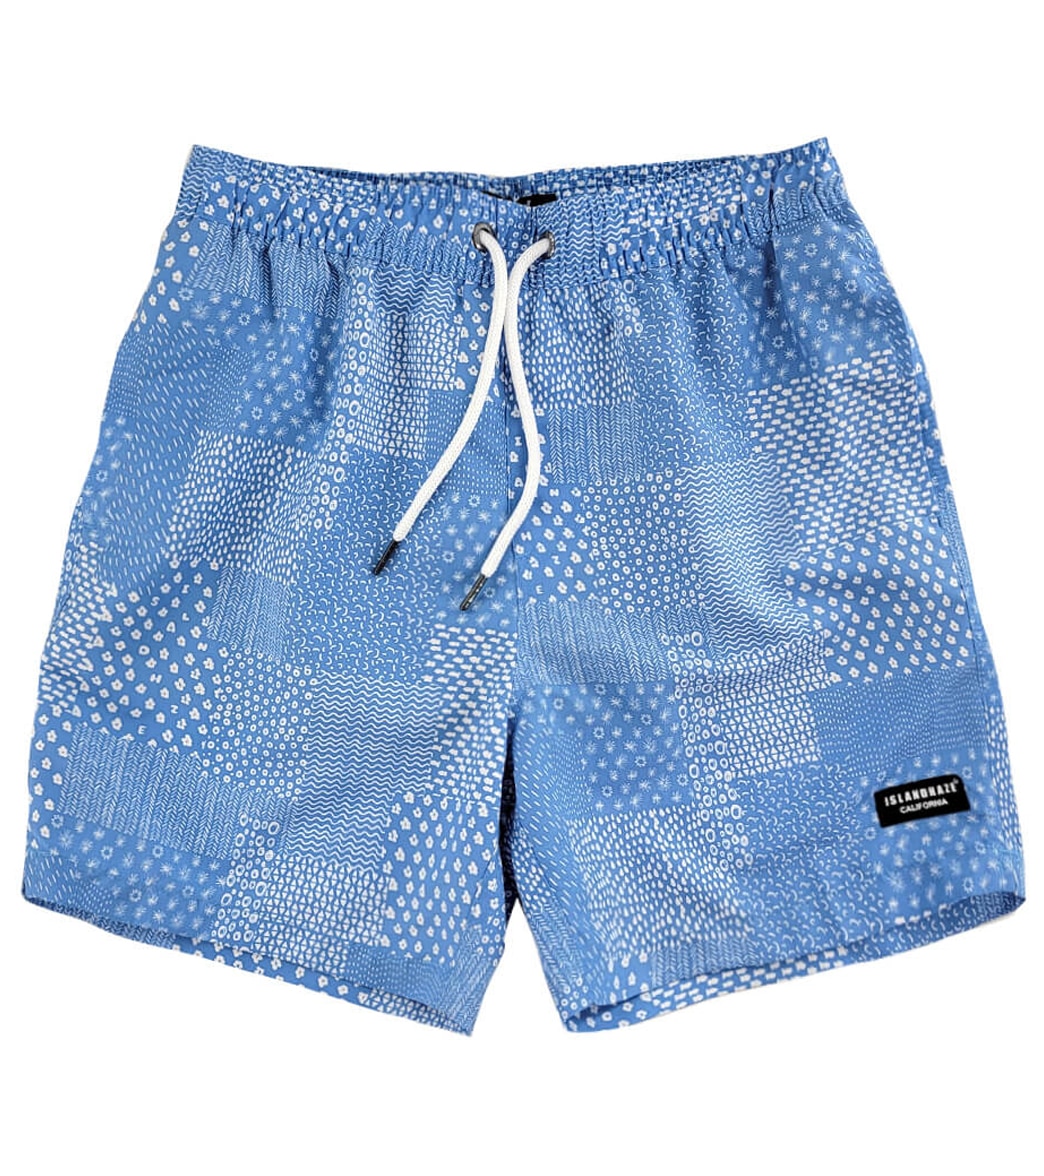 Island Haze Men's 17 Boro Printed Volley Shorts - Blue Large - Swimoutlet.com